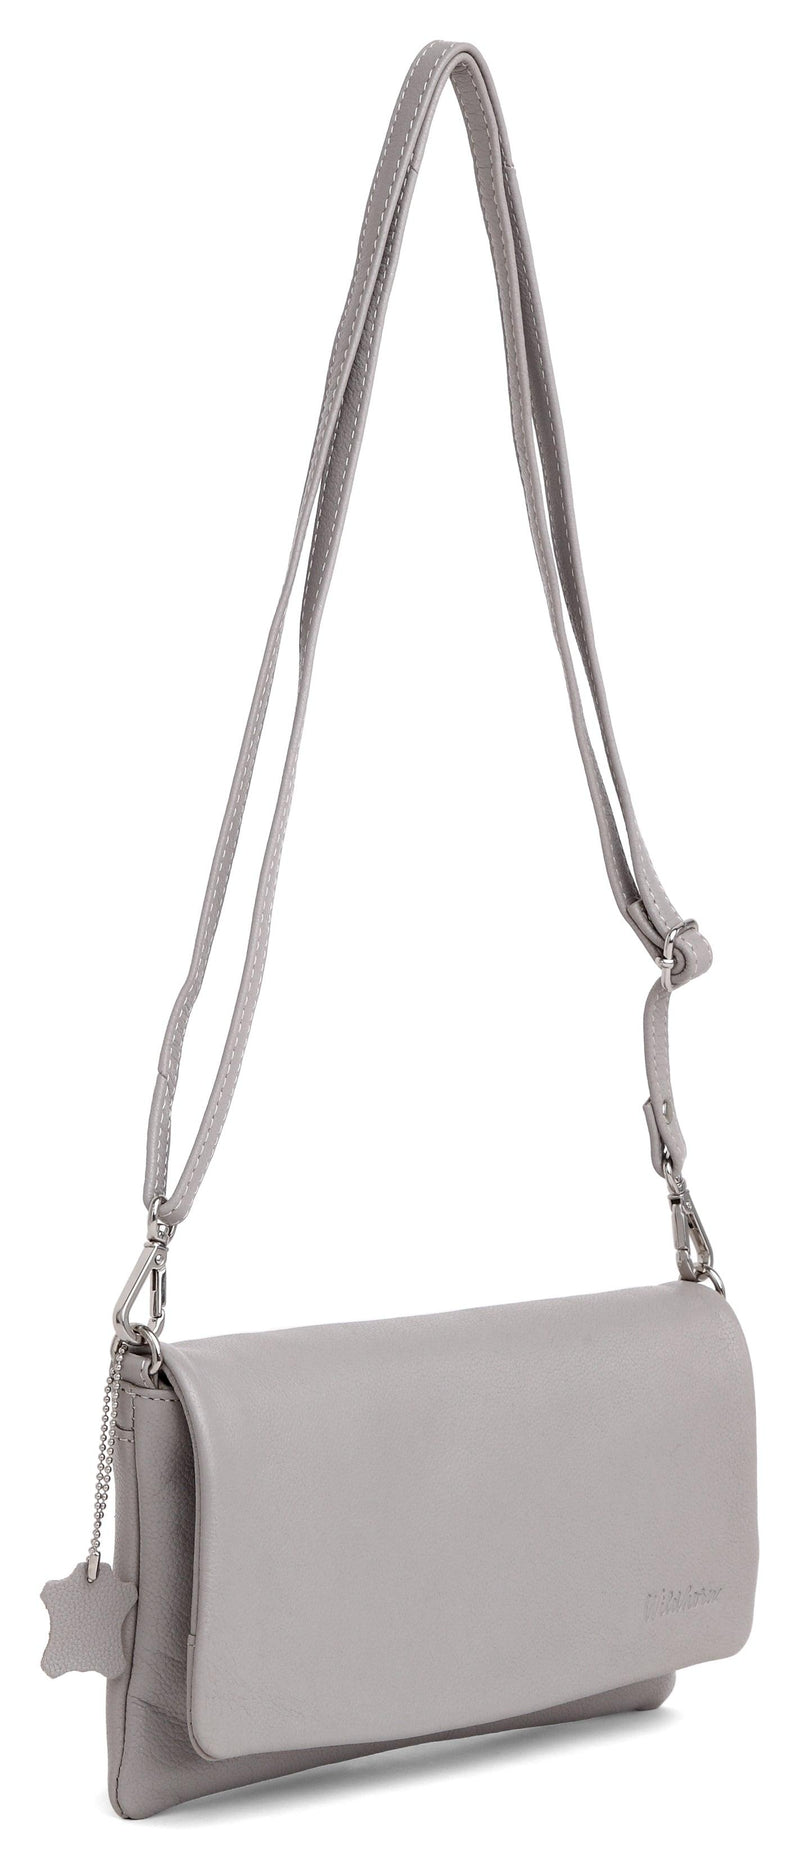 WILDHORN® Genuine Leather Ladies Crossbody Bag | Hand Bag | Purse with Adjustable Strap for Girls & Women. - WILDHORN